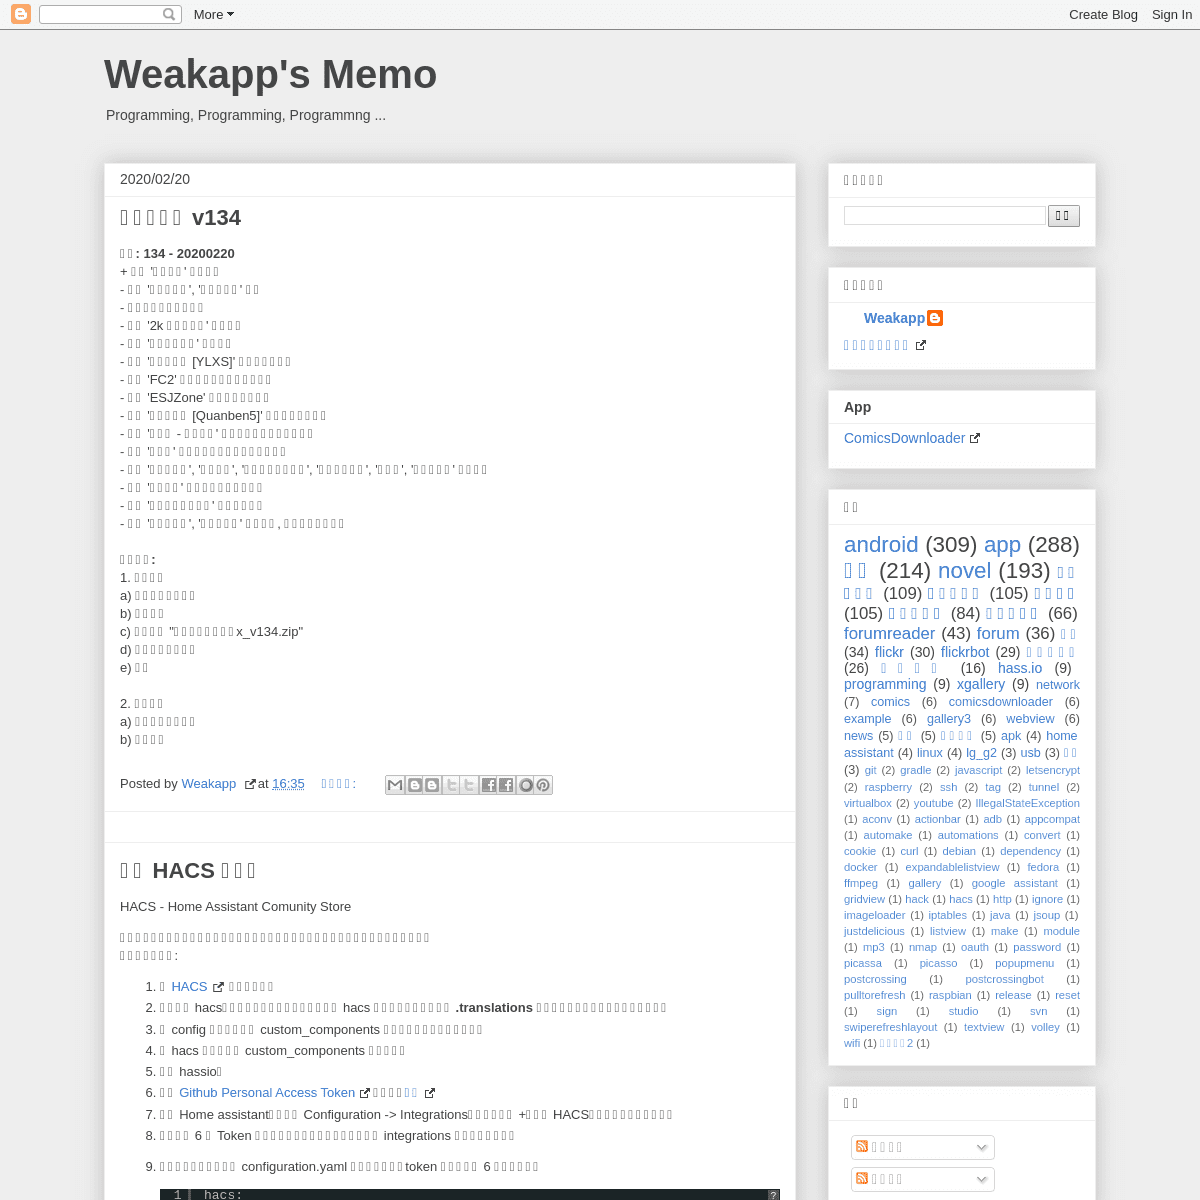 A complete backup of weakapp0320.blogspot.com